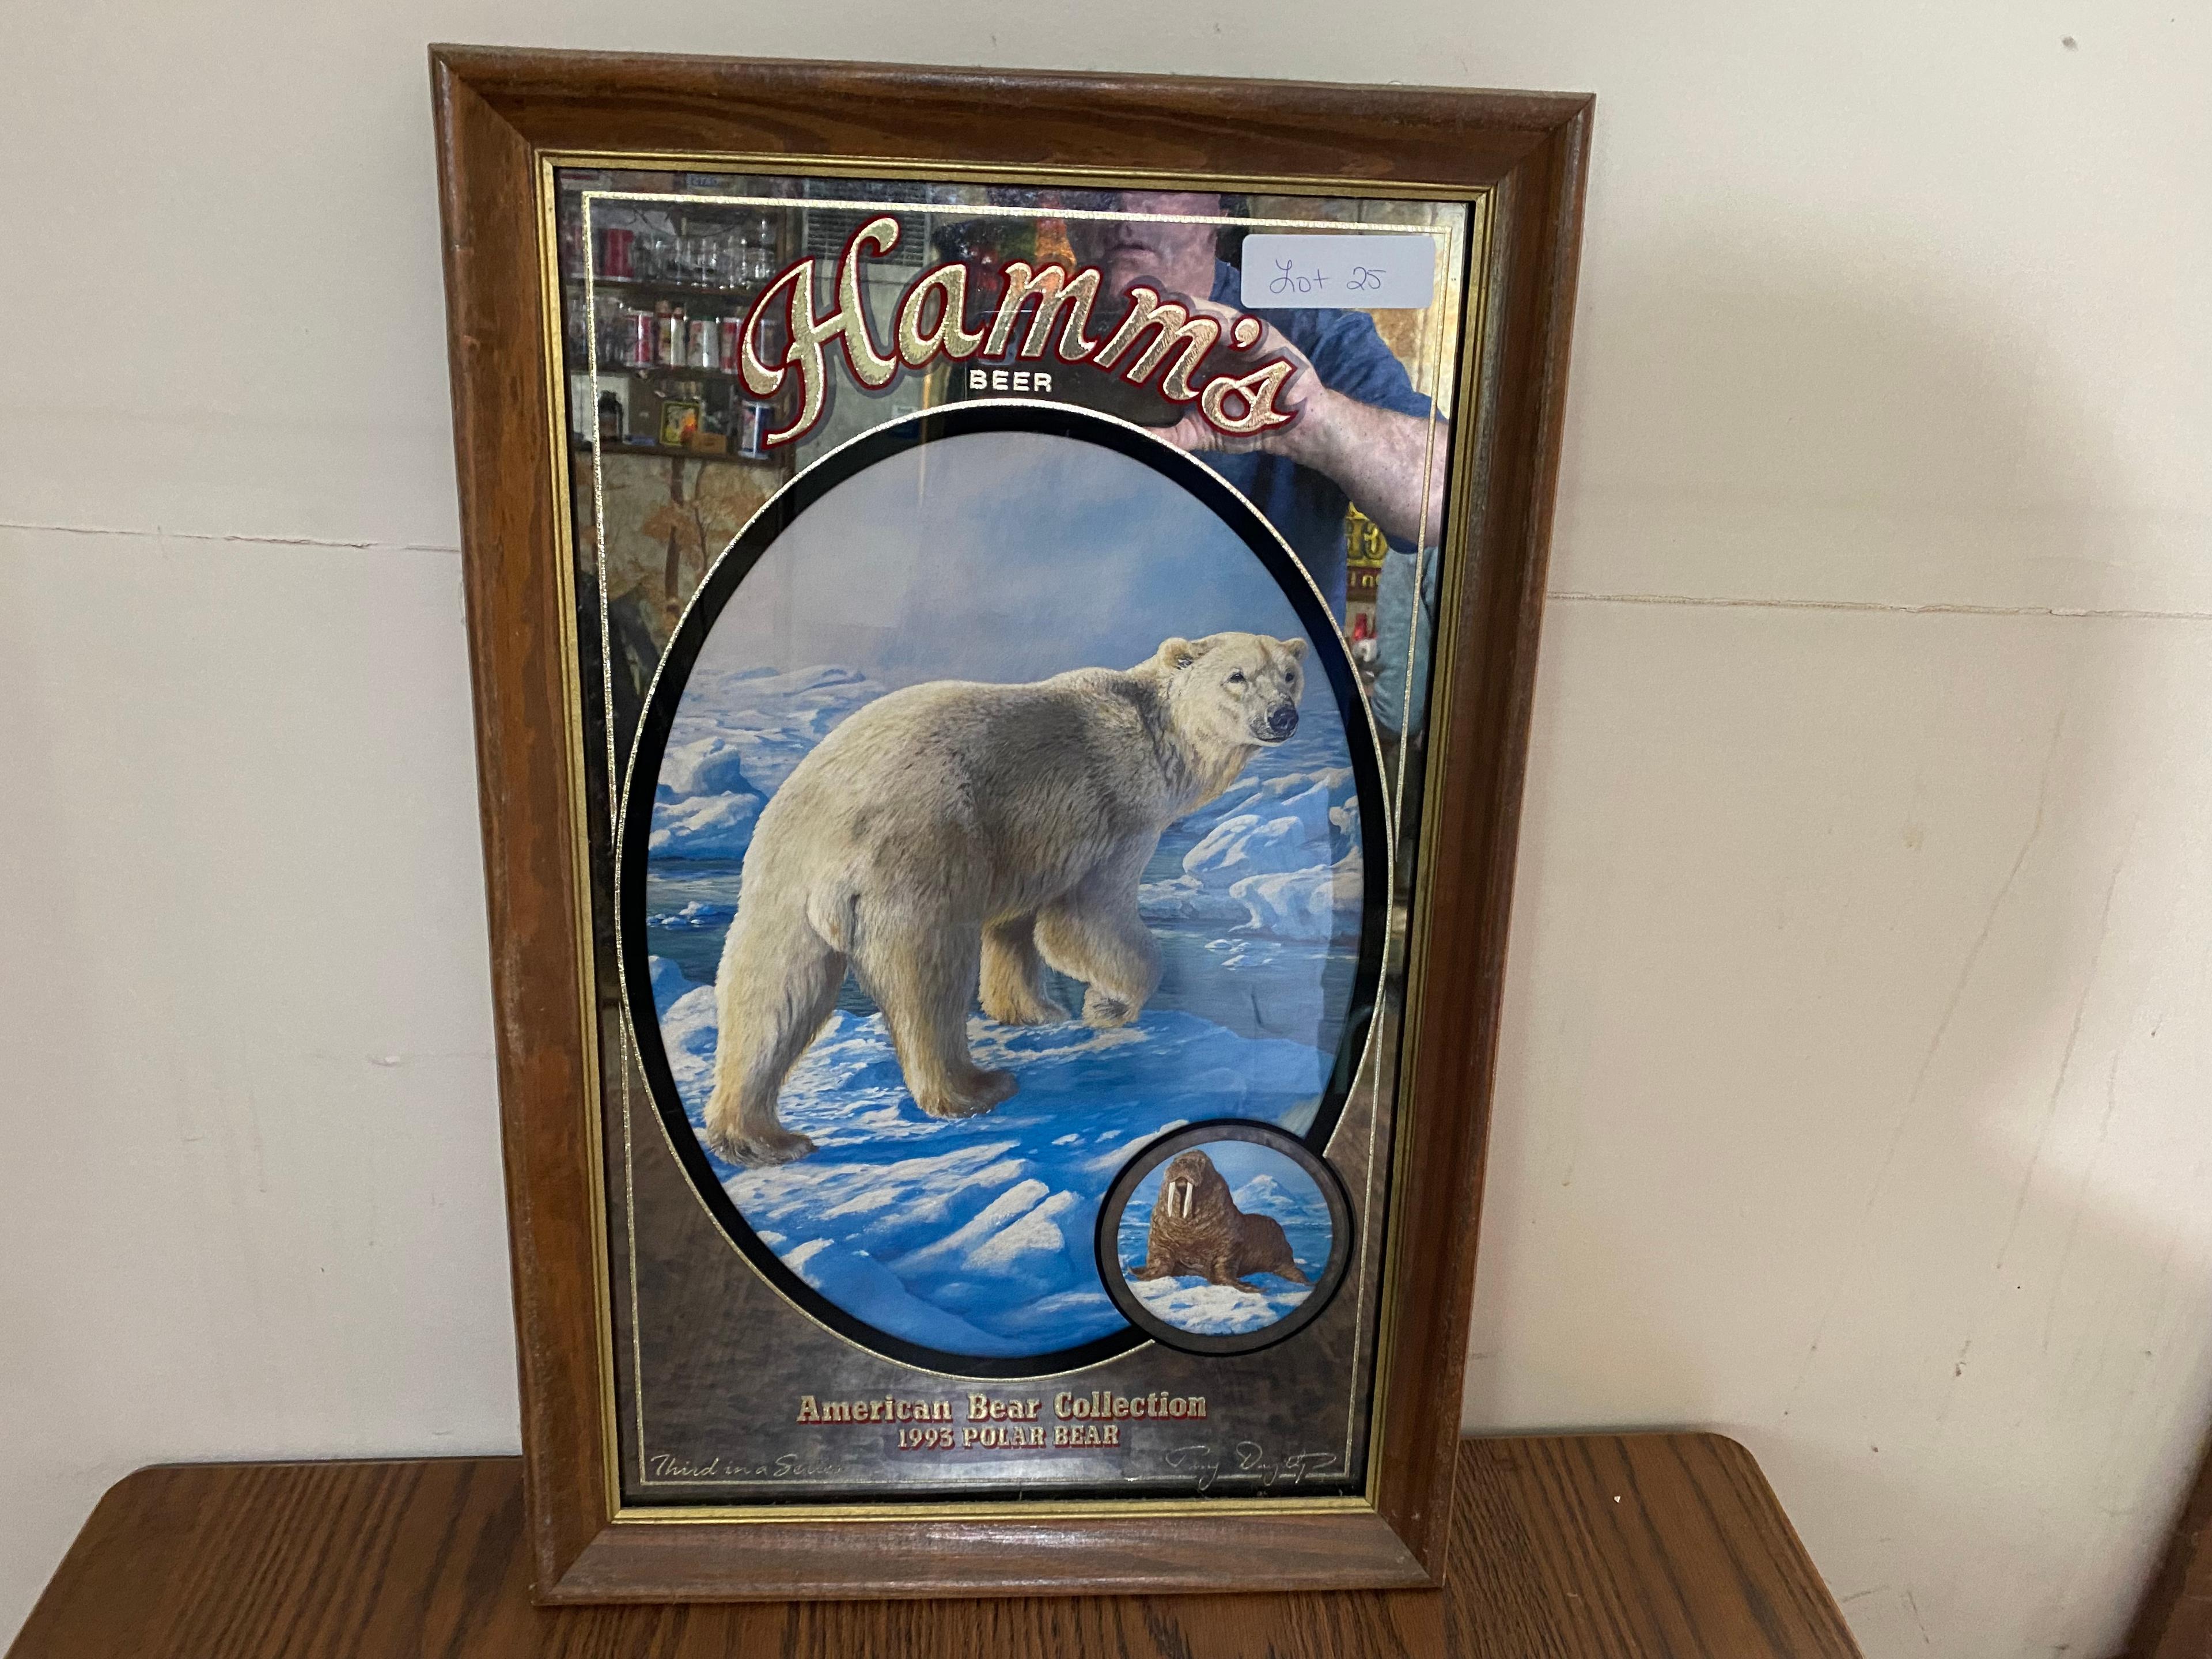 Hamm's American Bear Collection